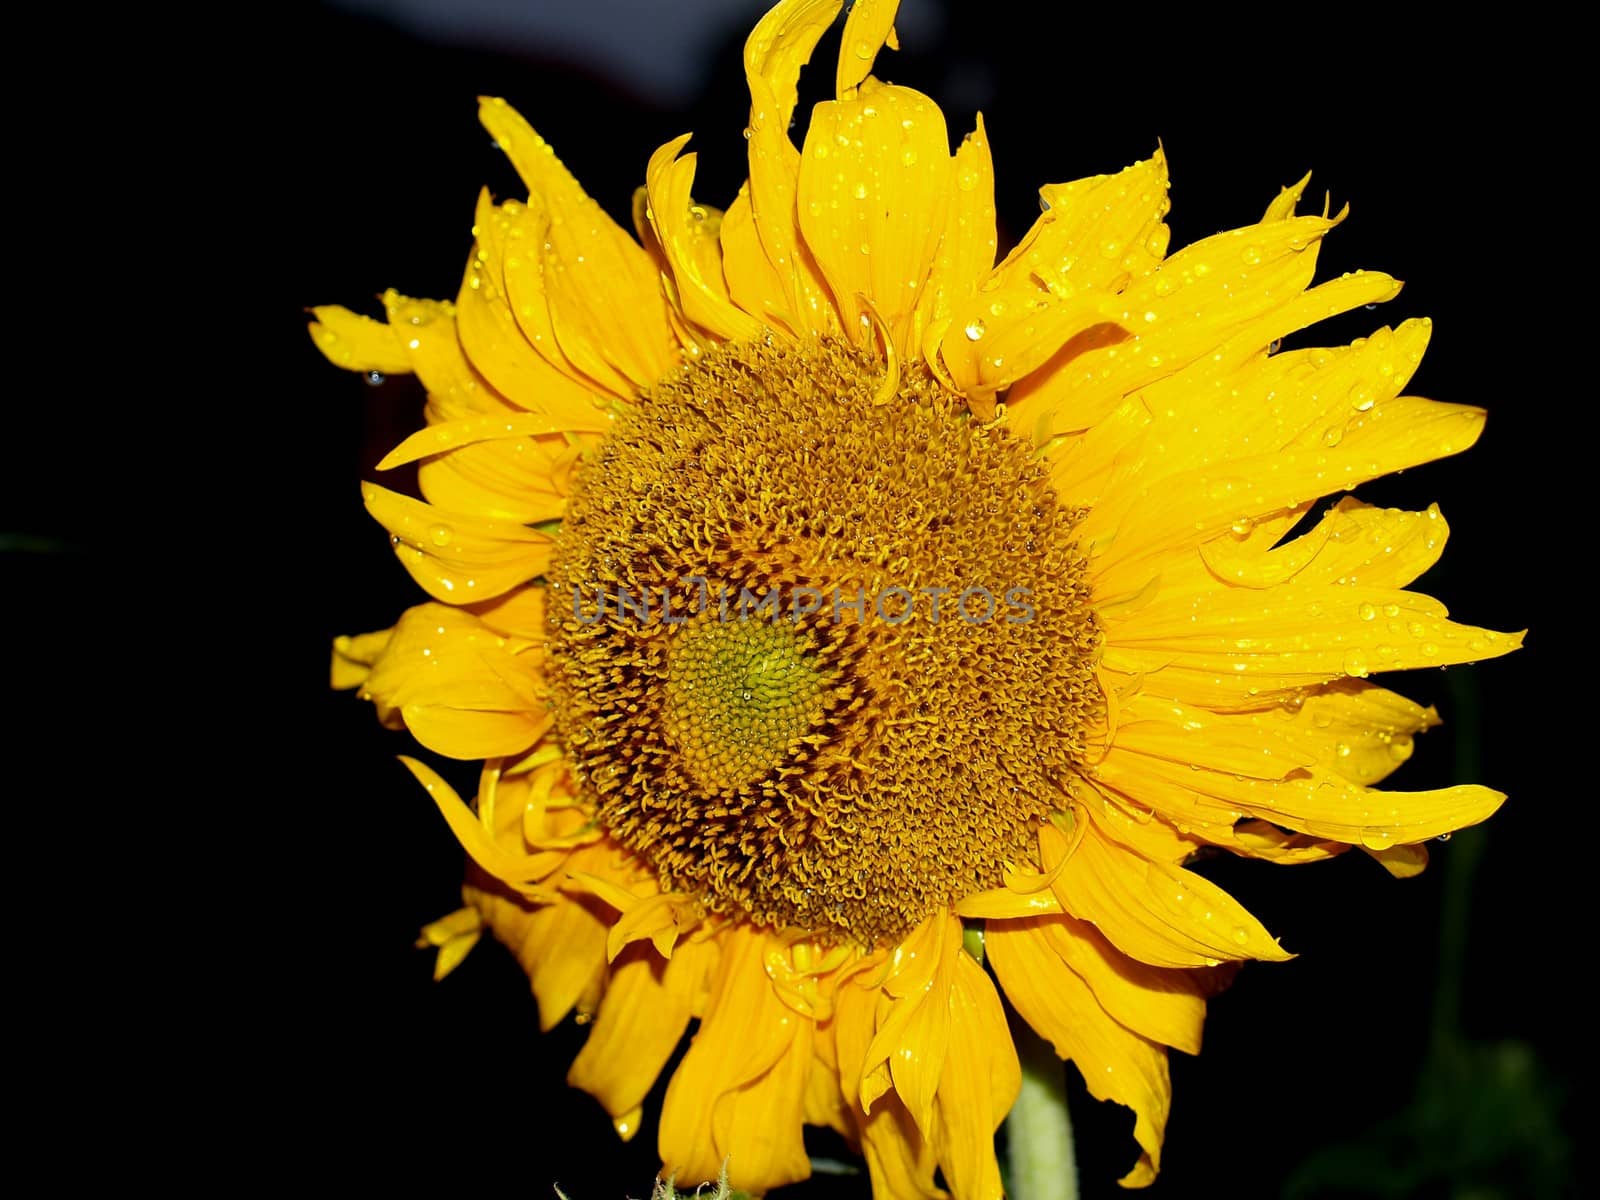 image  Sunflower field by kiddaikiddee